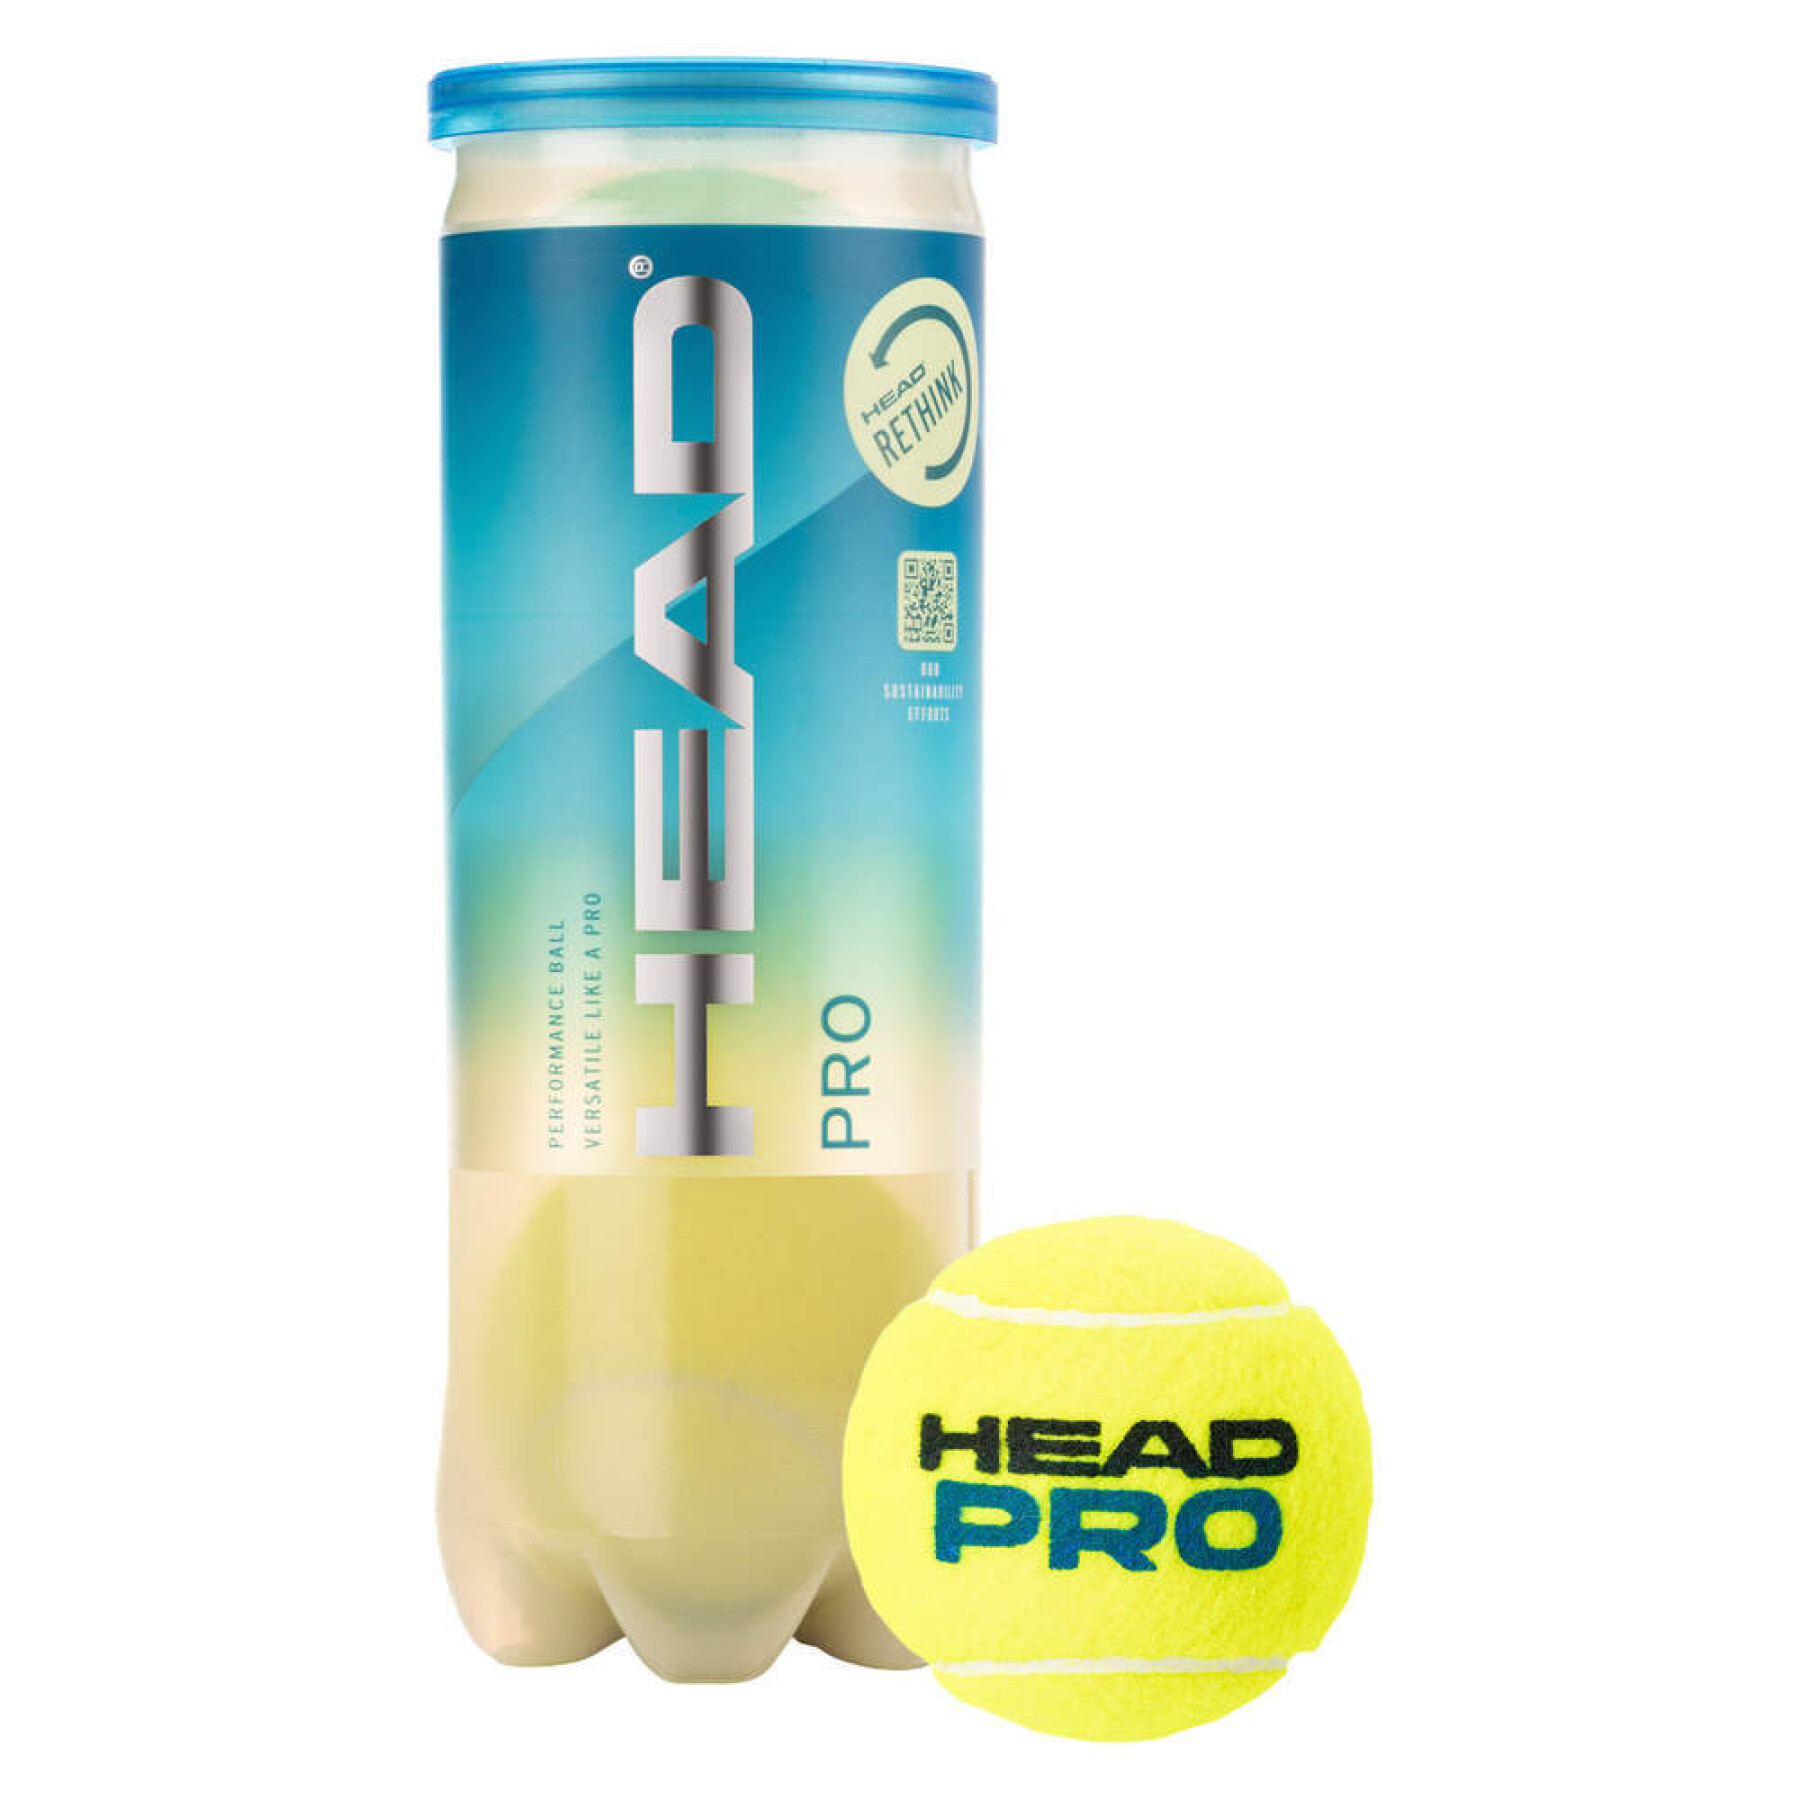 Bola de ténis Head Pro (x3)